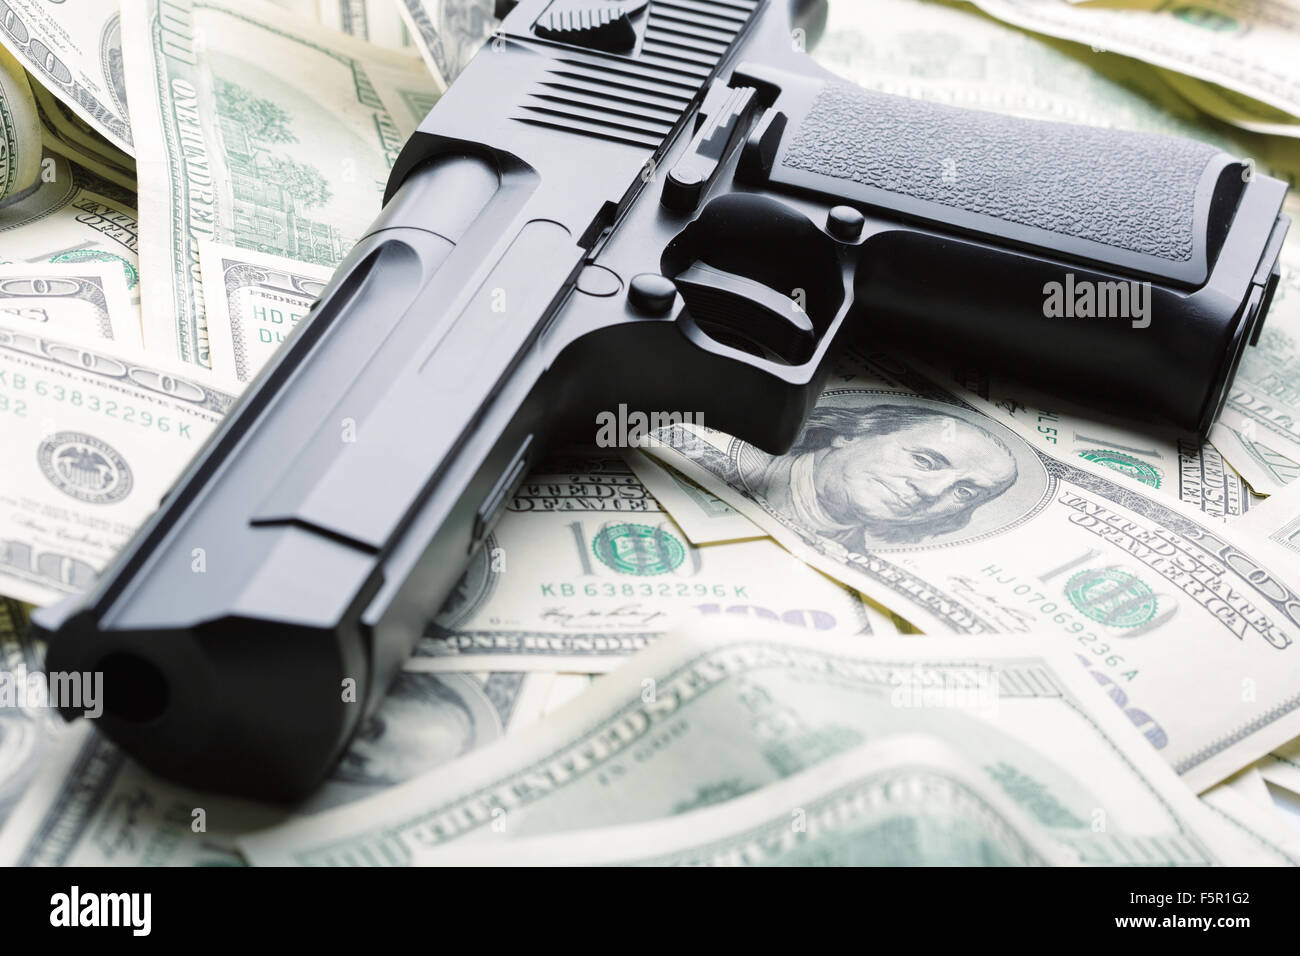 Heap of $100 dollar bills and handgun Stock Photo